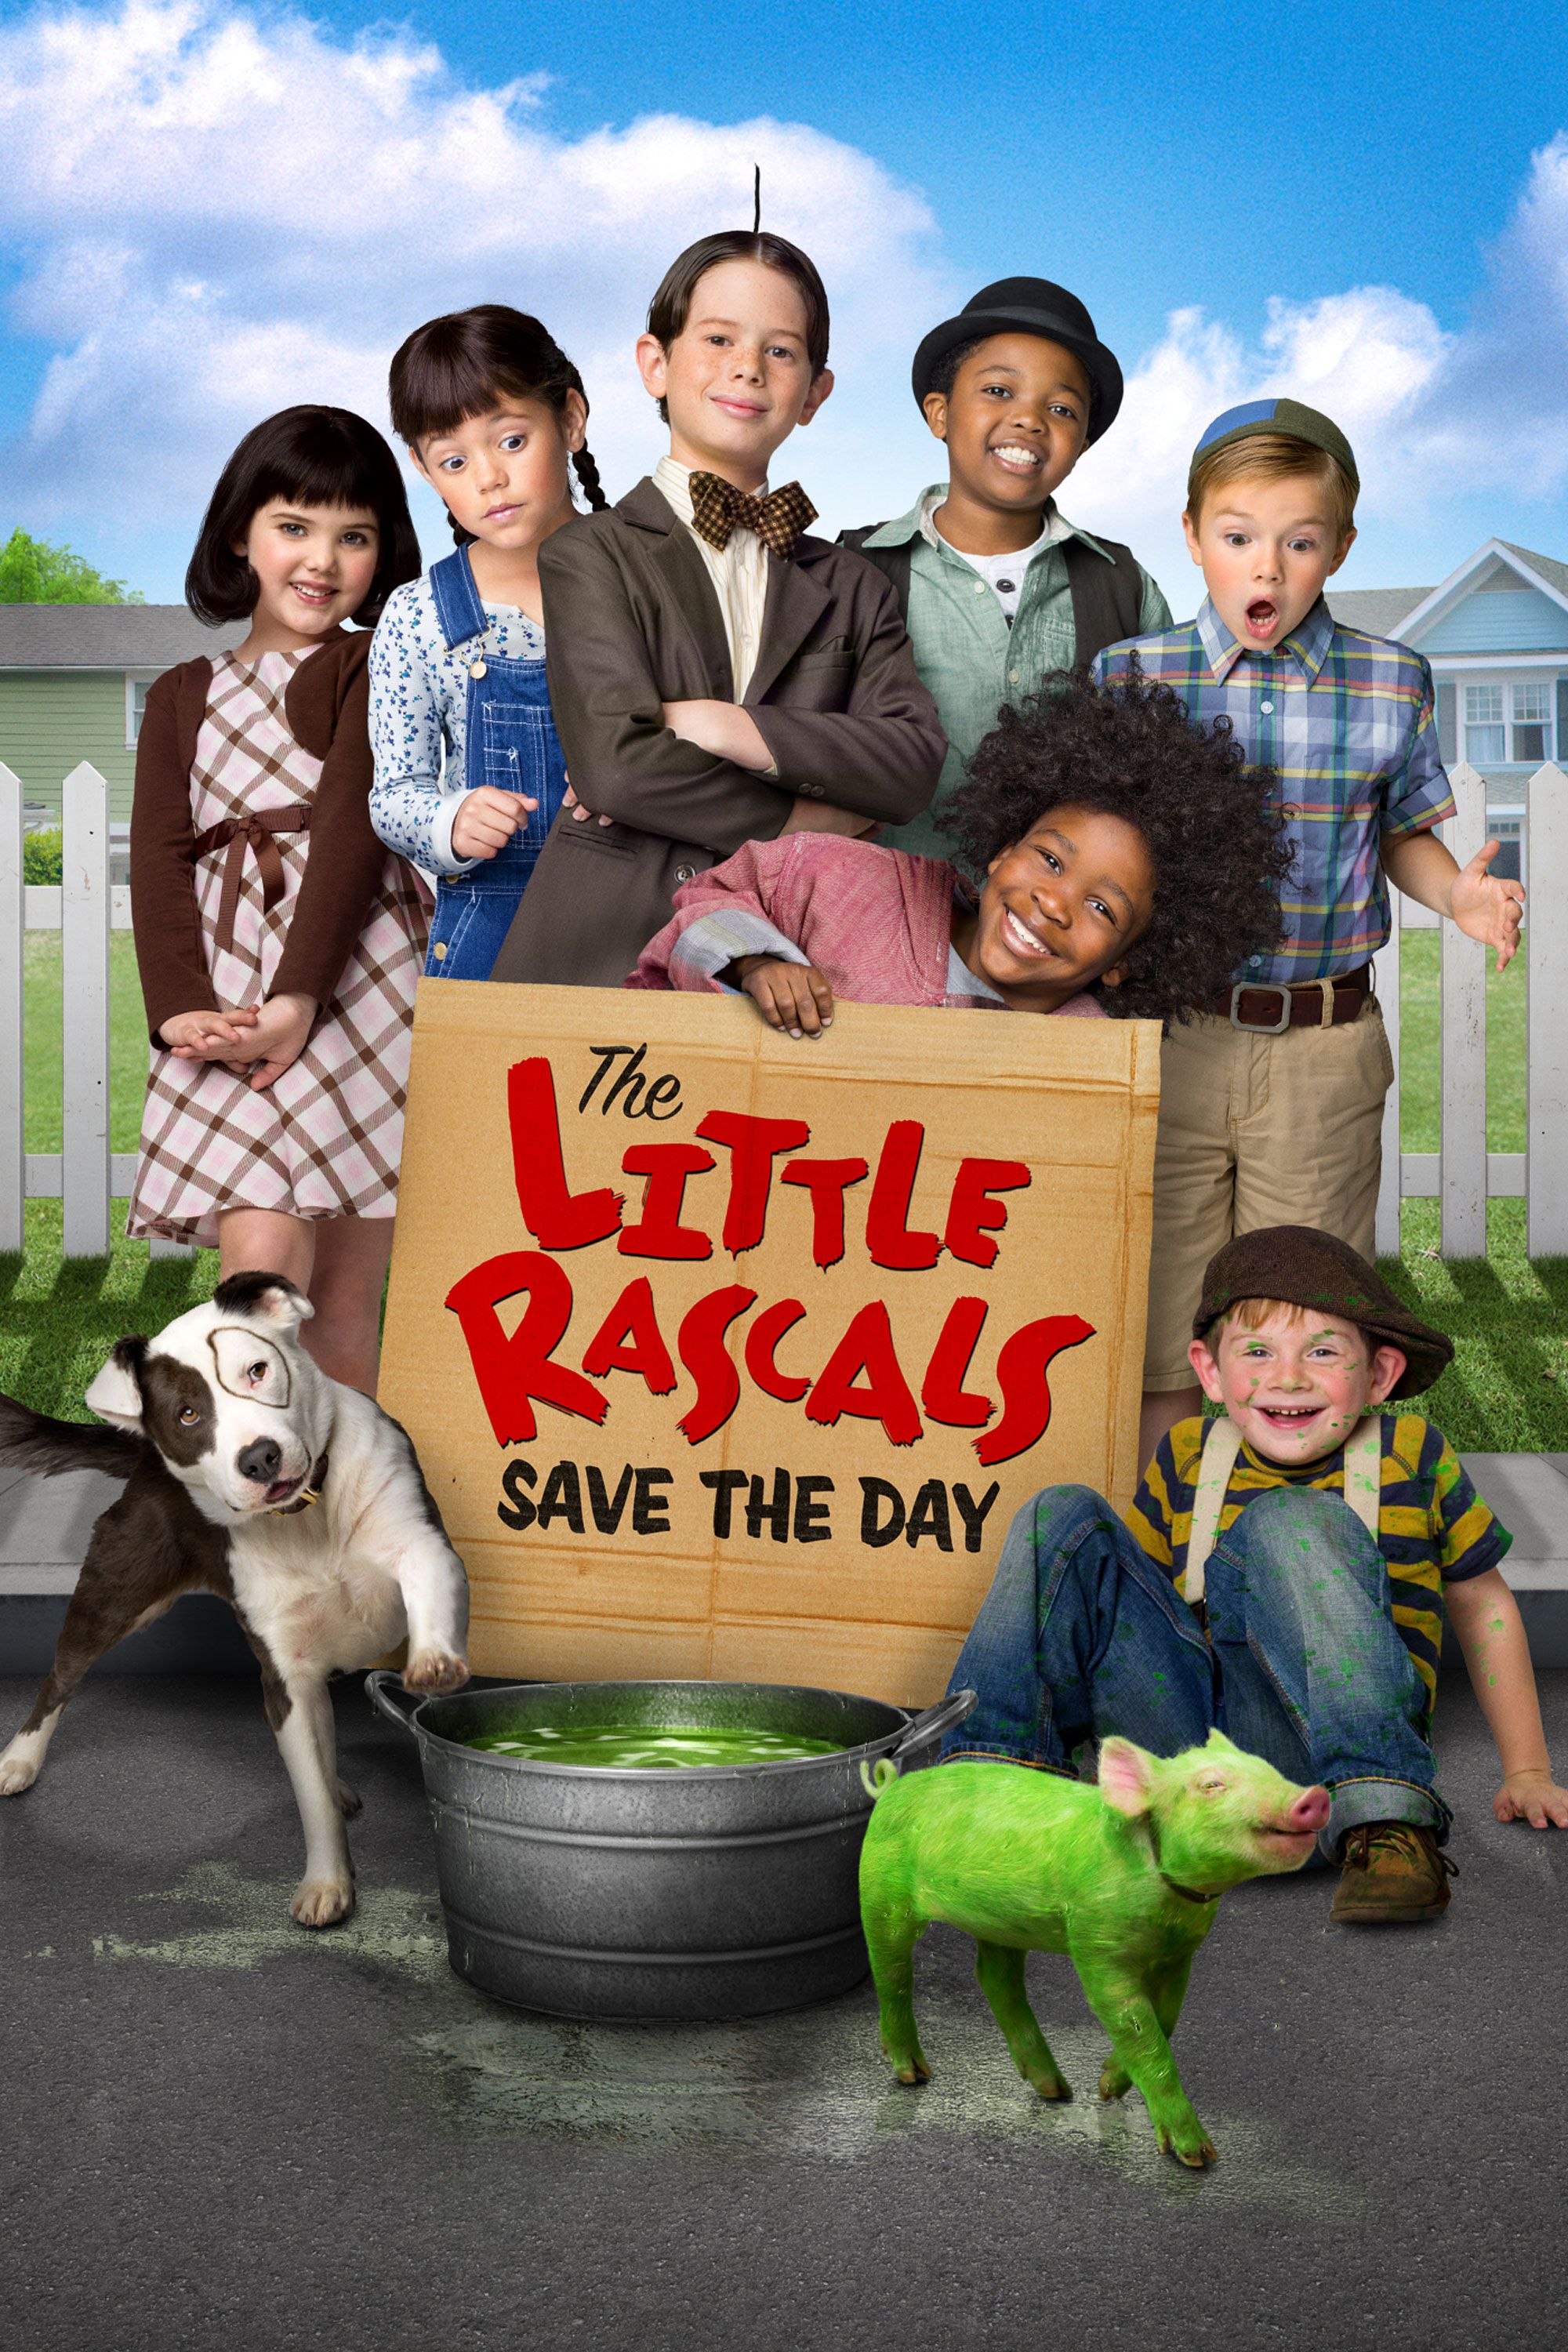 the little rascals full movie 2014